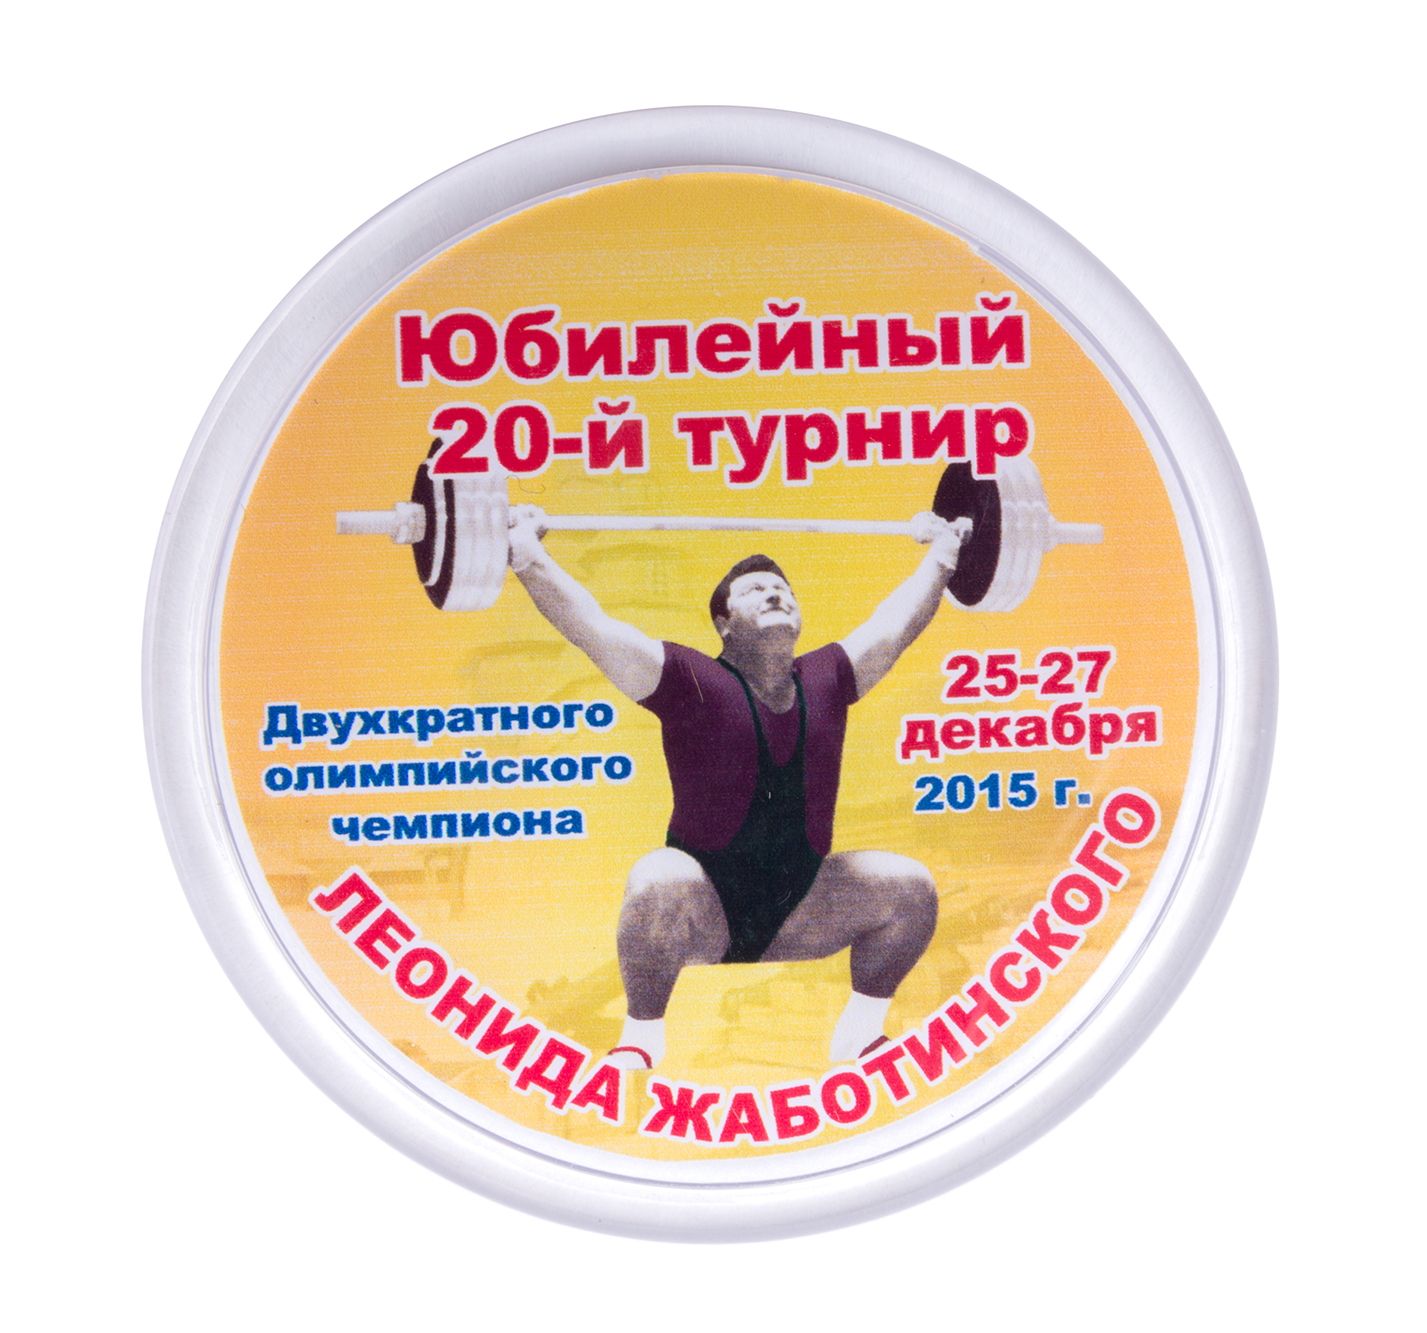 Leonid Zhabotinsky souvenir magnet